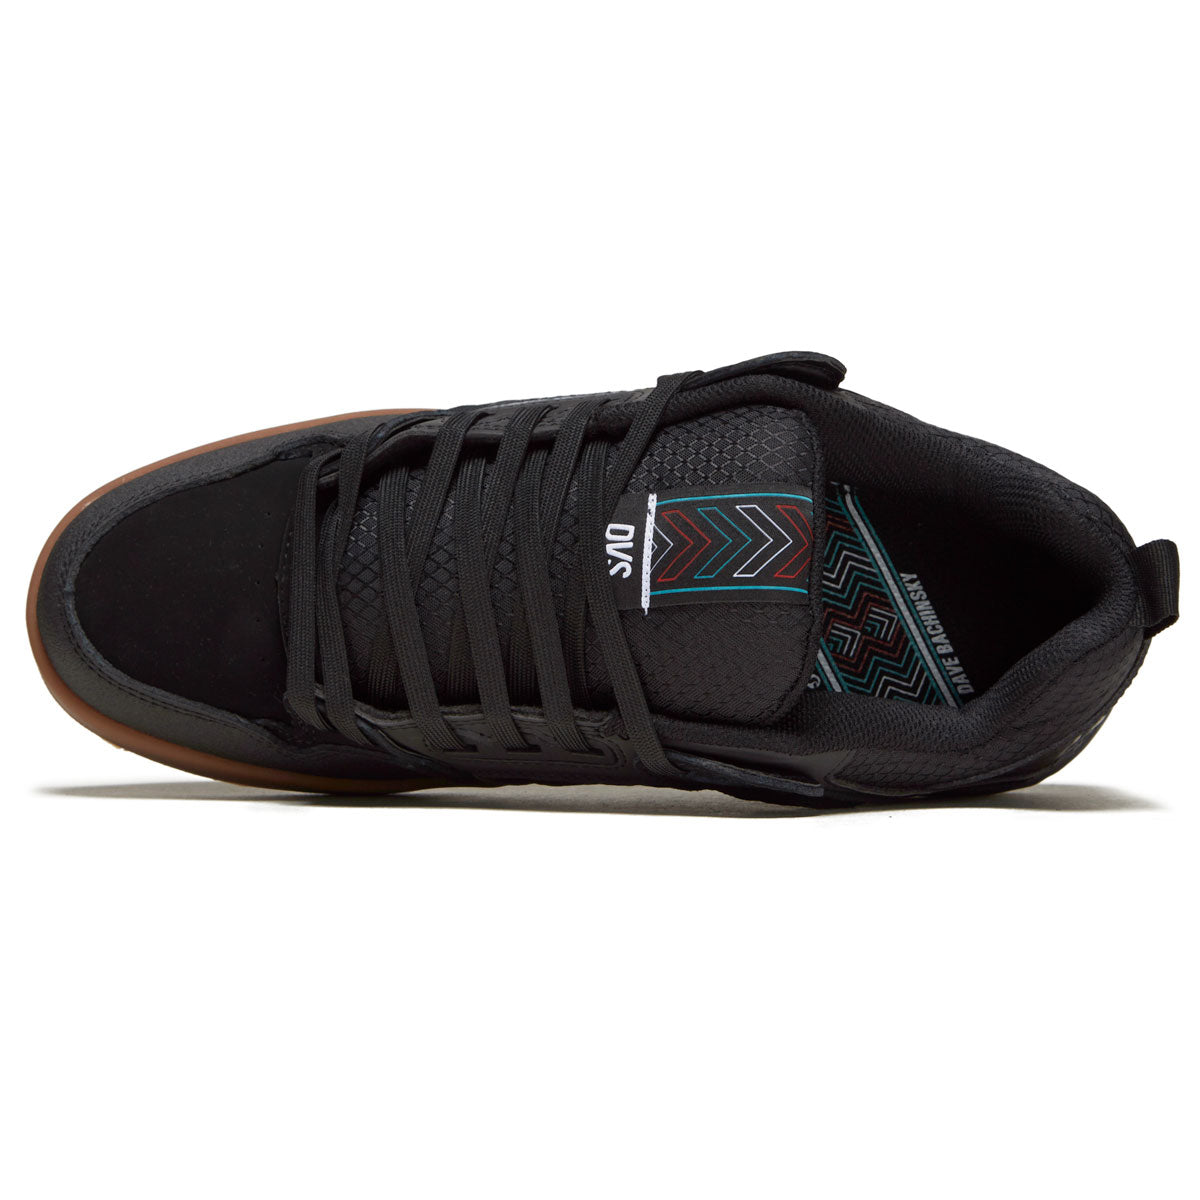 DVS Comanche 2.0+ Shoes - Black Reflective Gum Nubuck/Dave Bachinksy image 3